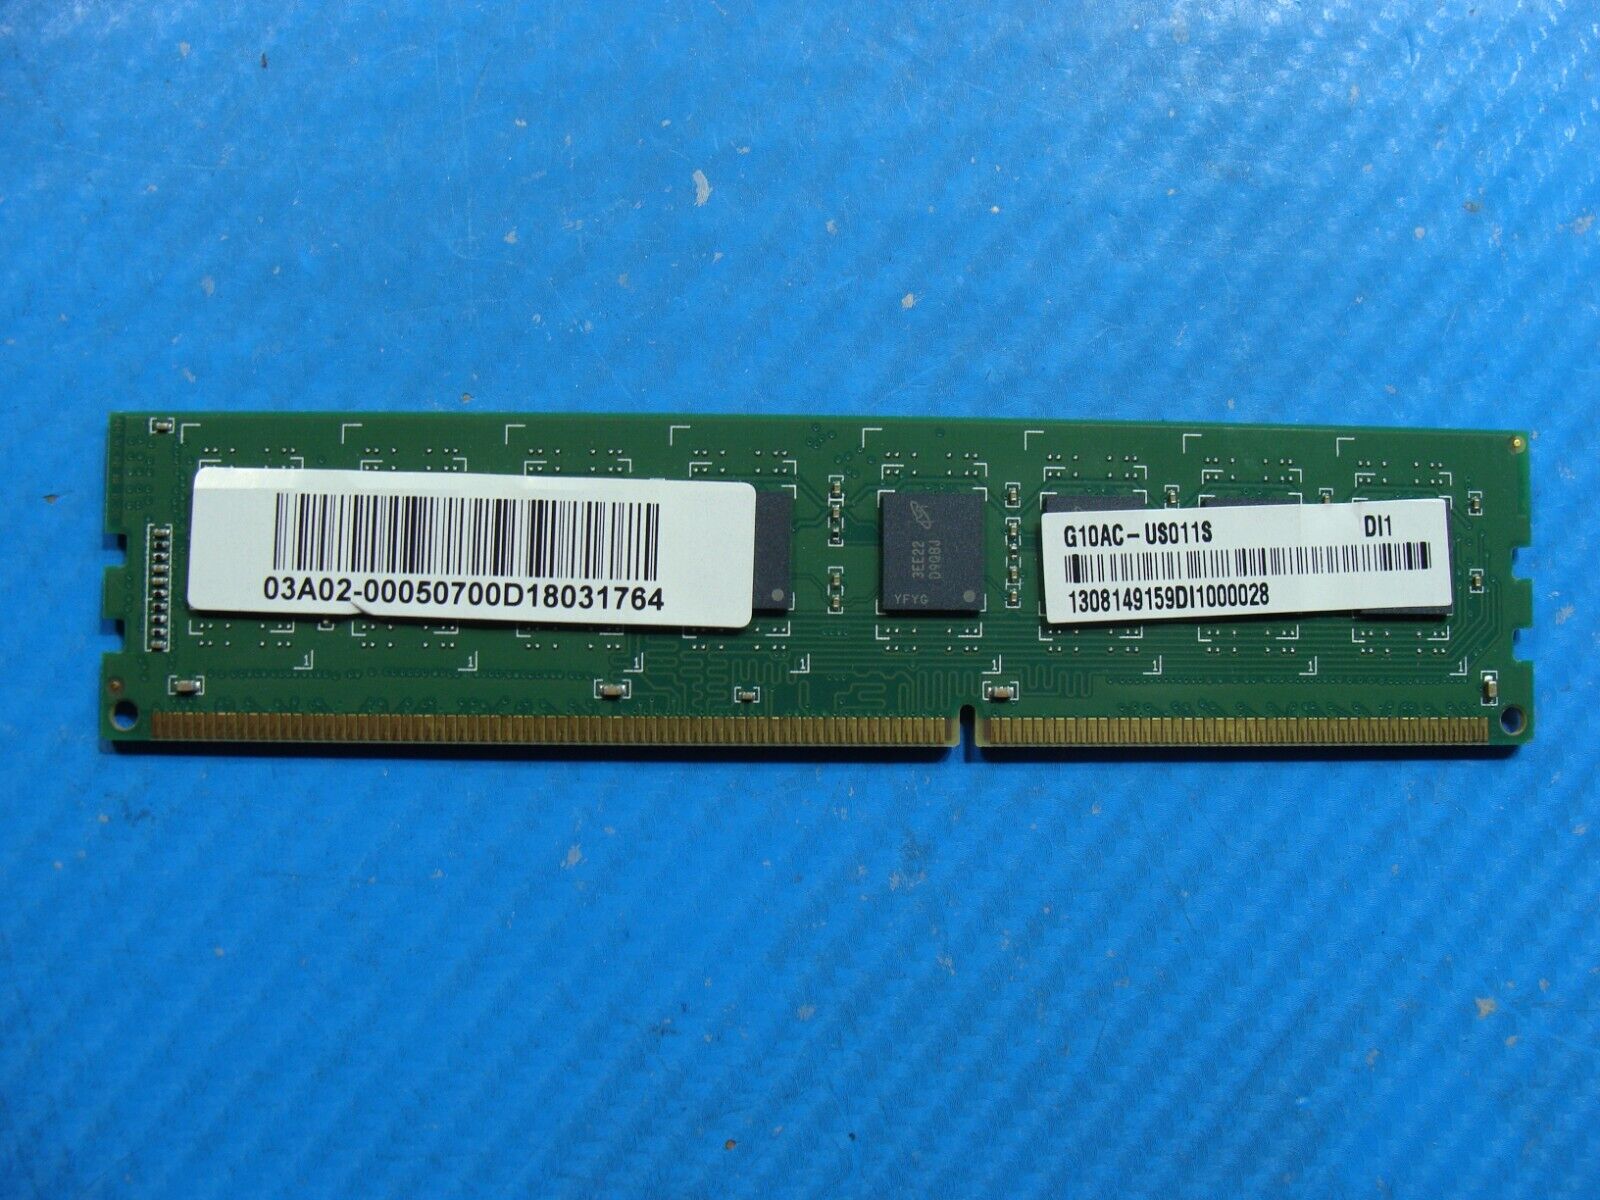 Asus G10AC-US011S ADATA 8GB 2Rx8 PC3-12800U UDIMM Memory RAM MI64C1D1629Z1